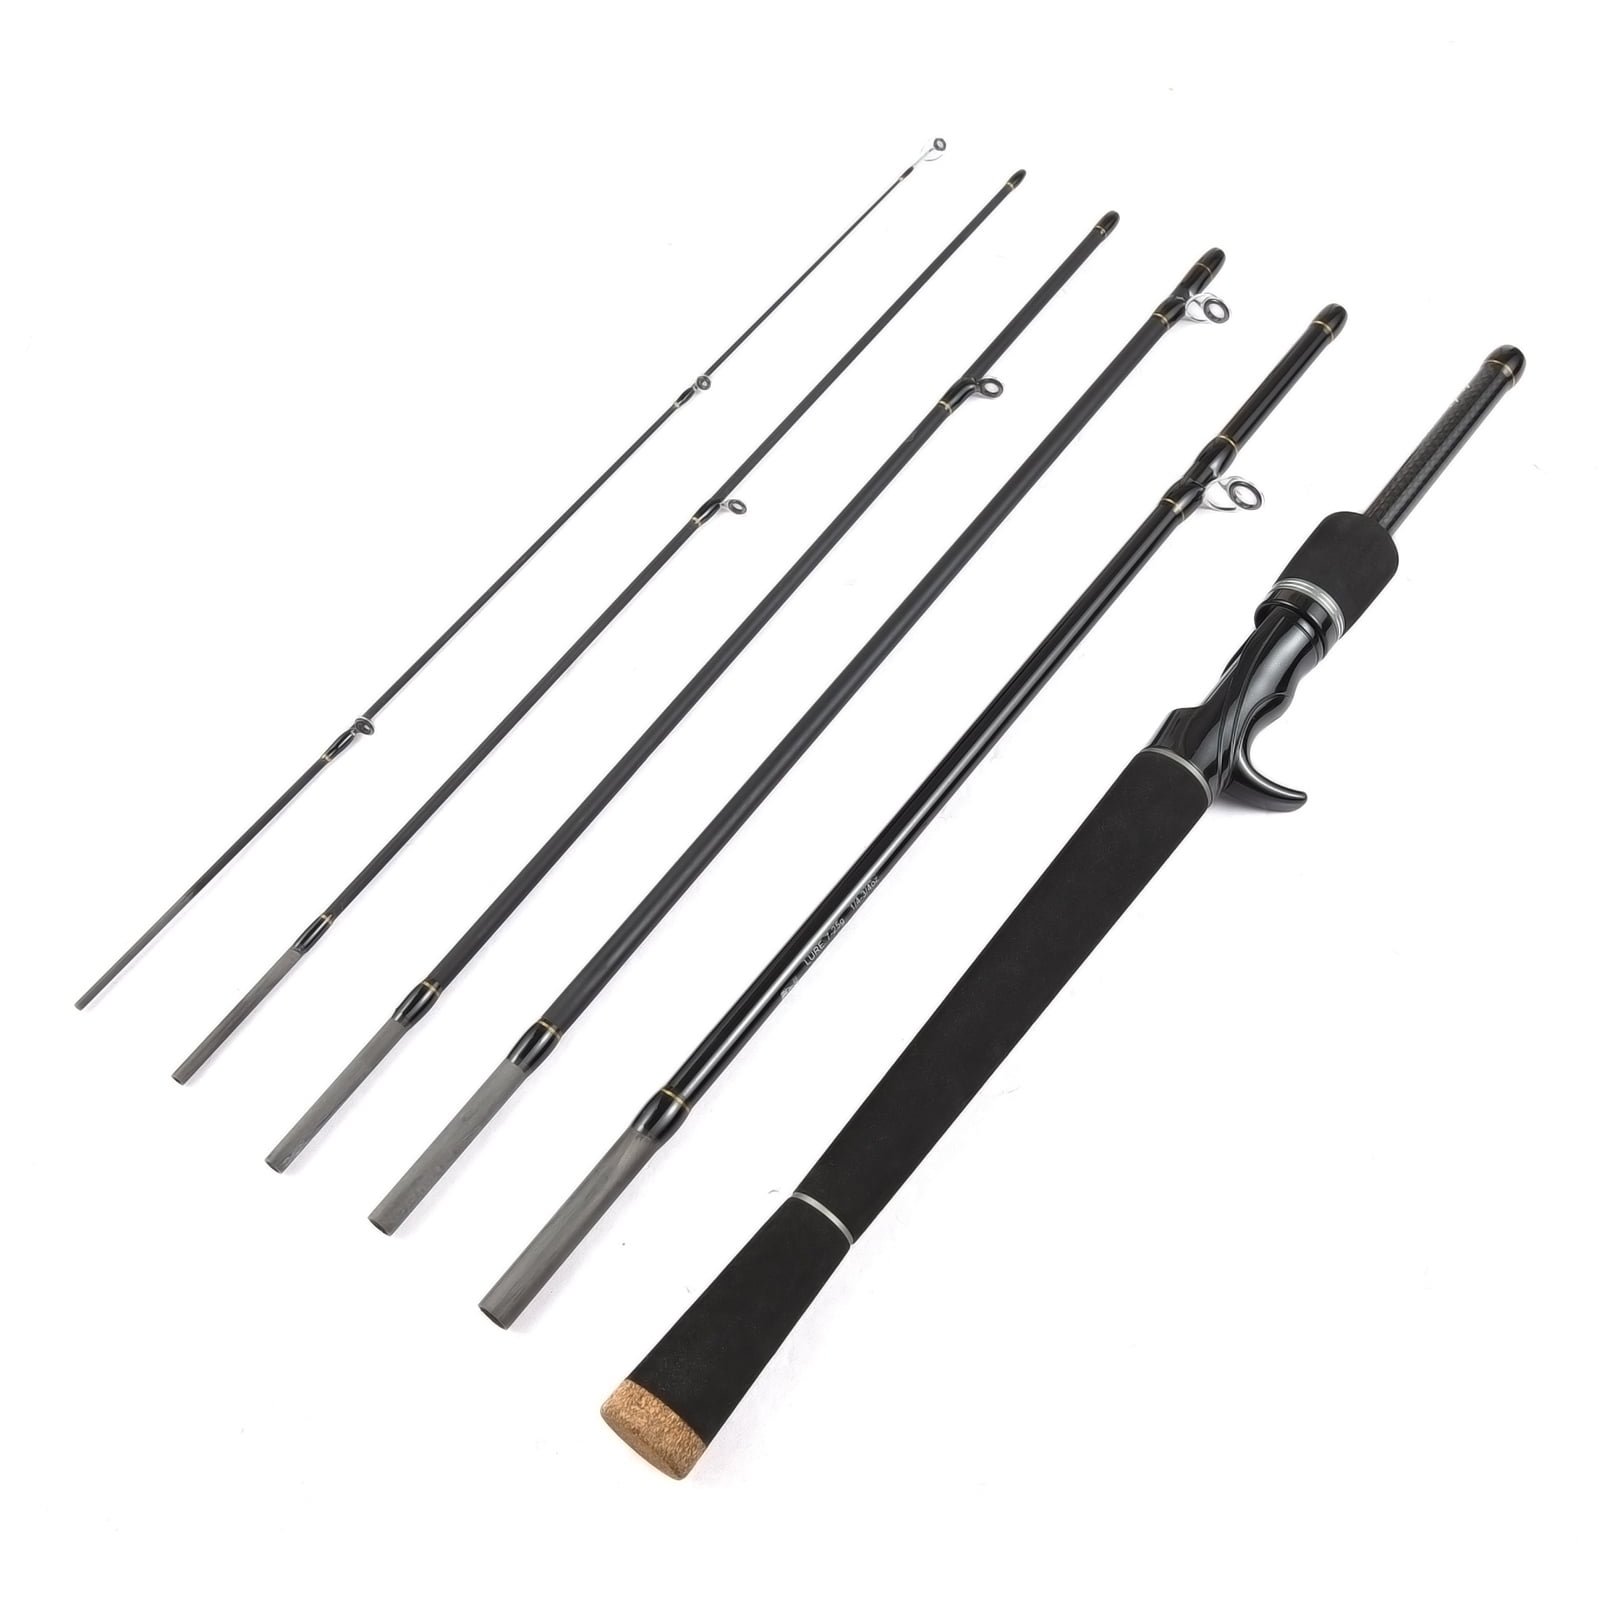 Carevas 6 Piece Fishing Pole Ultralight Spinning/Casting Rod